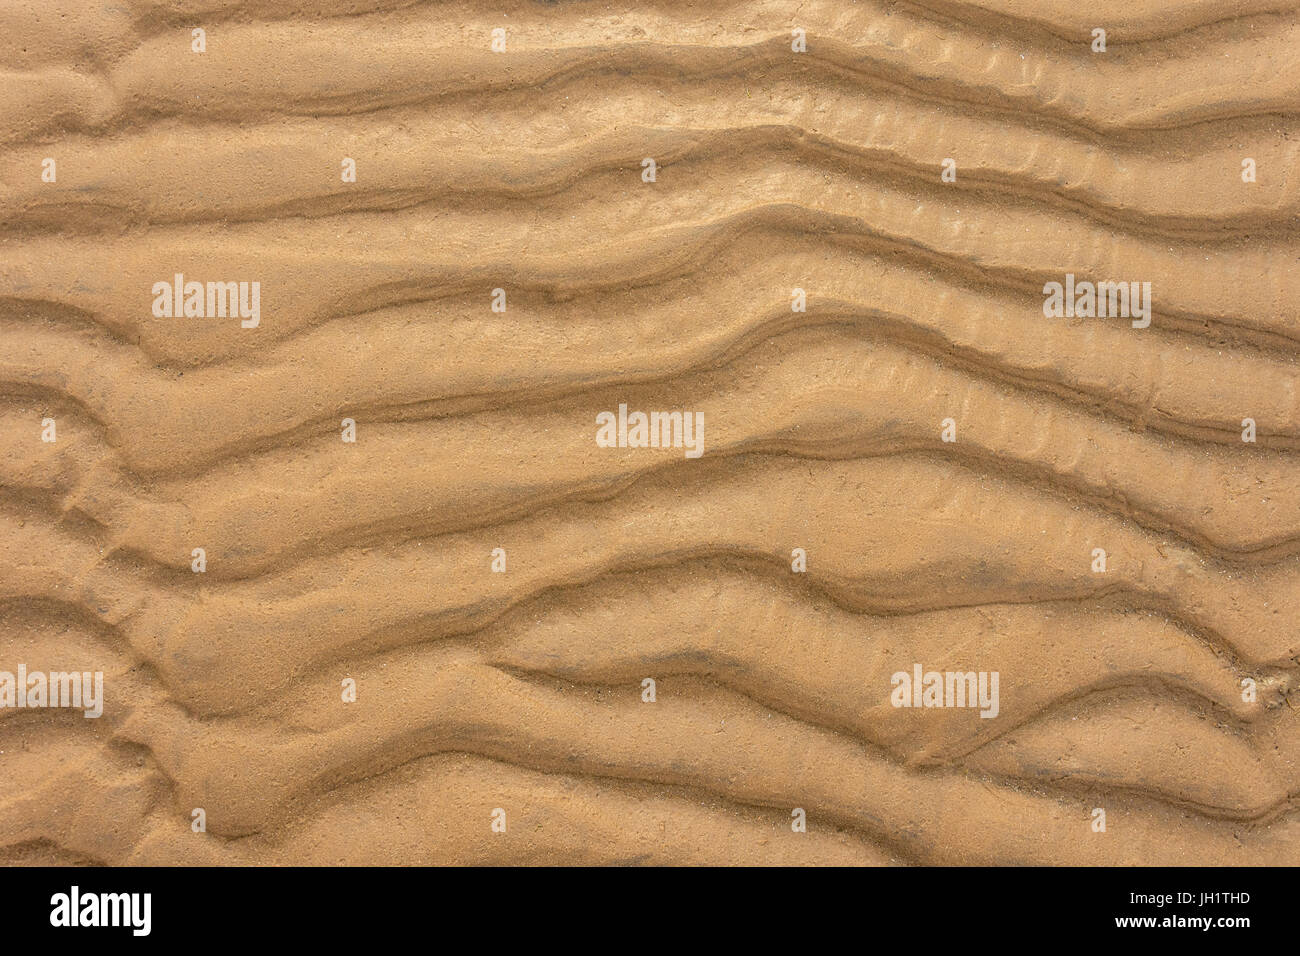 wet sand texture Stock Photo